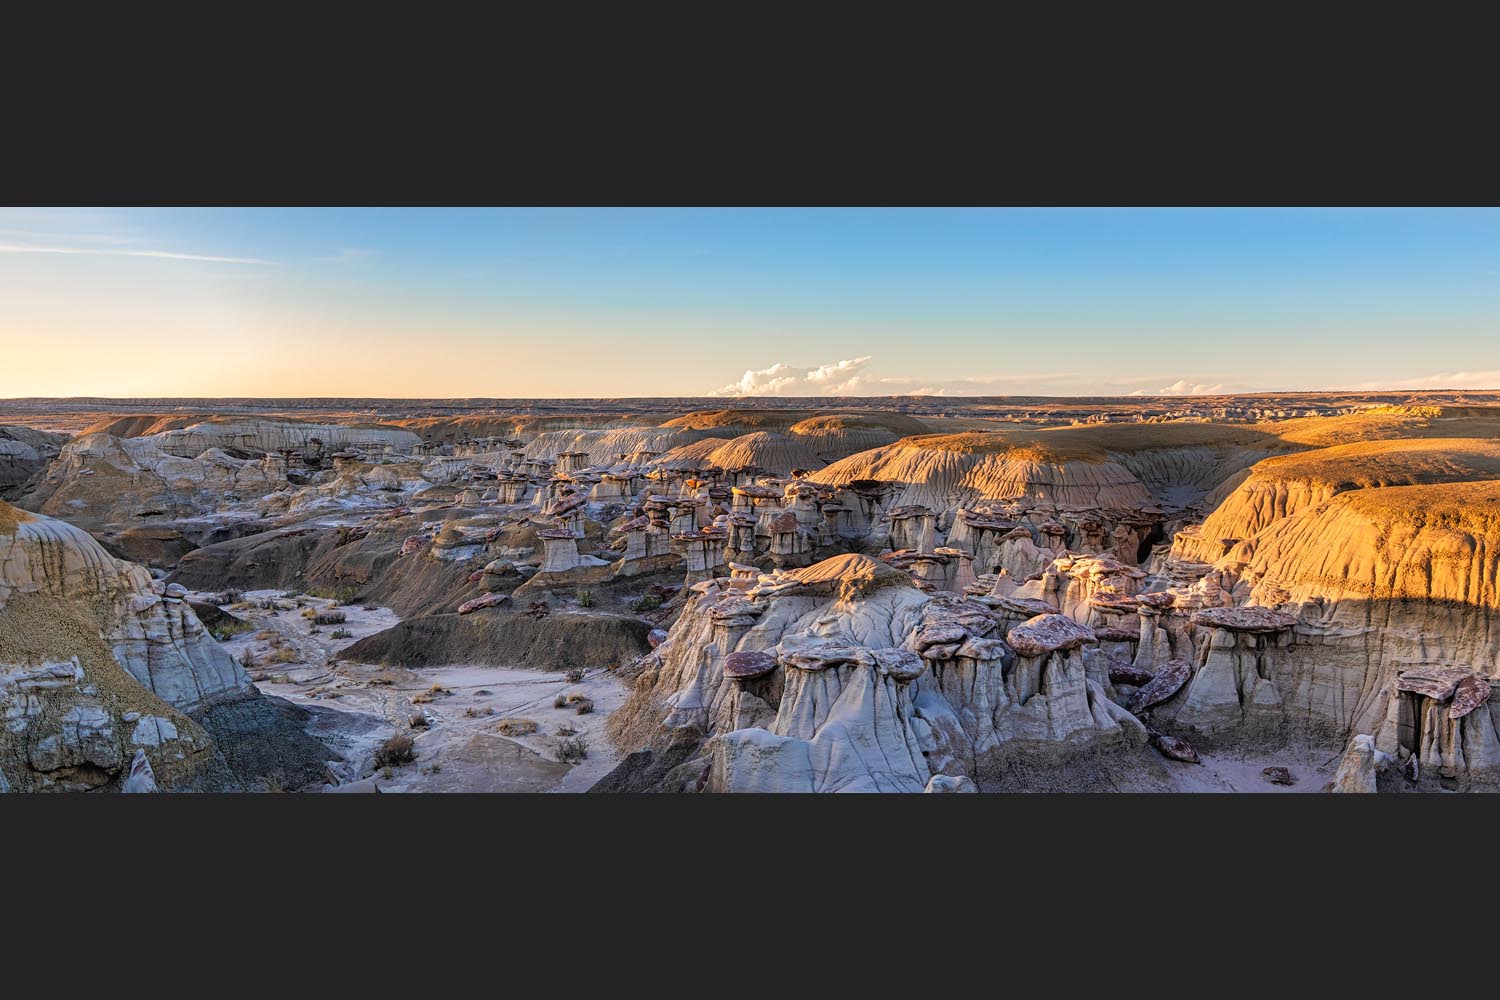 Alan Sucsy: Arid Sunset  - Ah-Shi-Sle-Pah Badlands - New Mexico